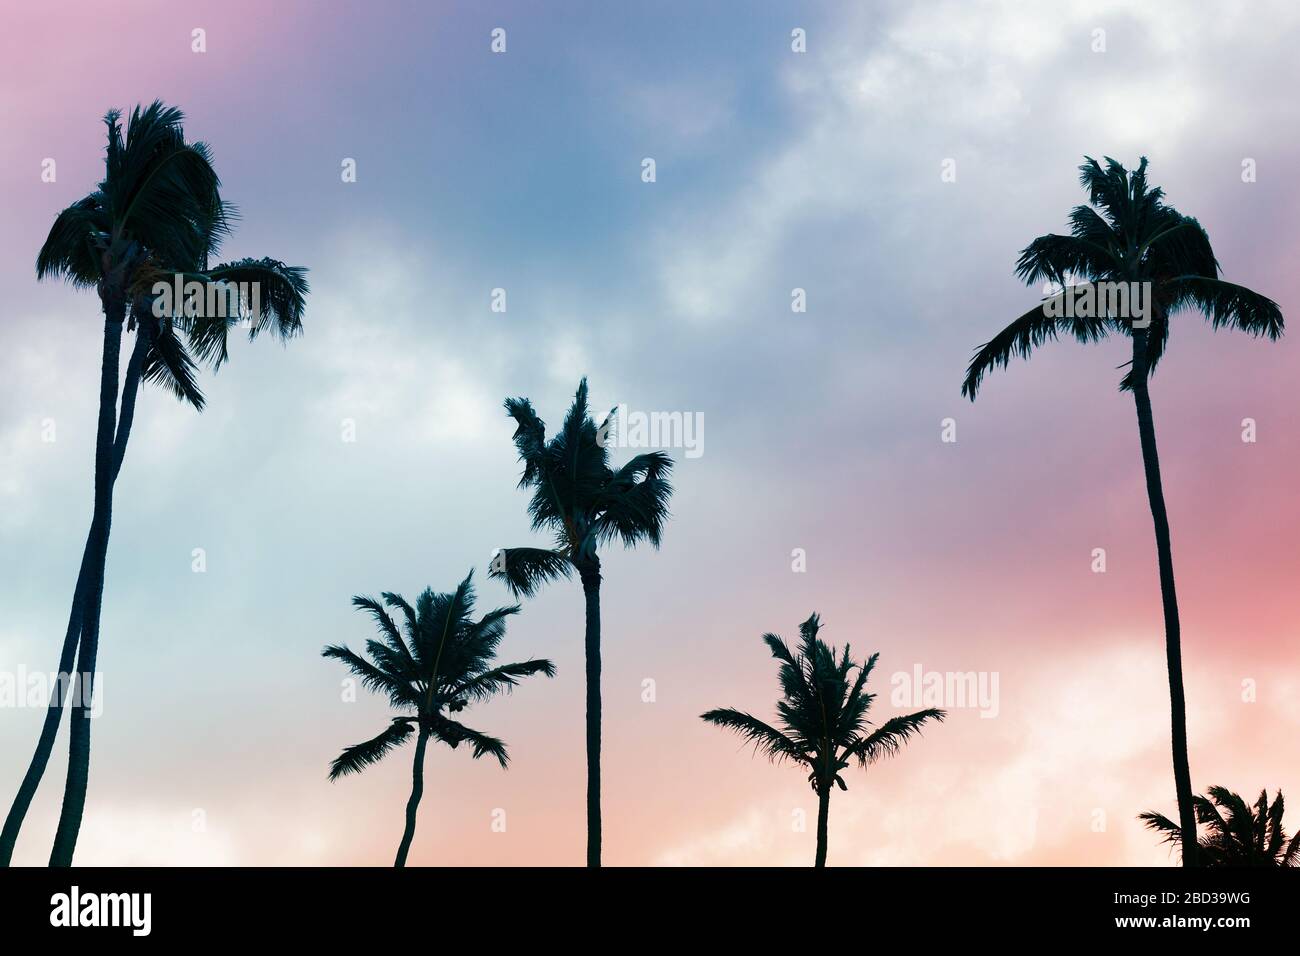 Palmen Silhouetten unter farbenfrohem bewölktem Himmel Hintergrund Stockfoto